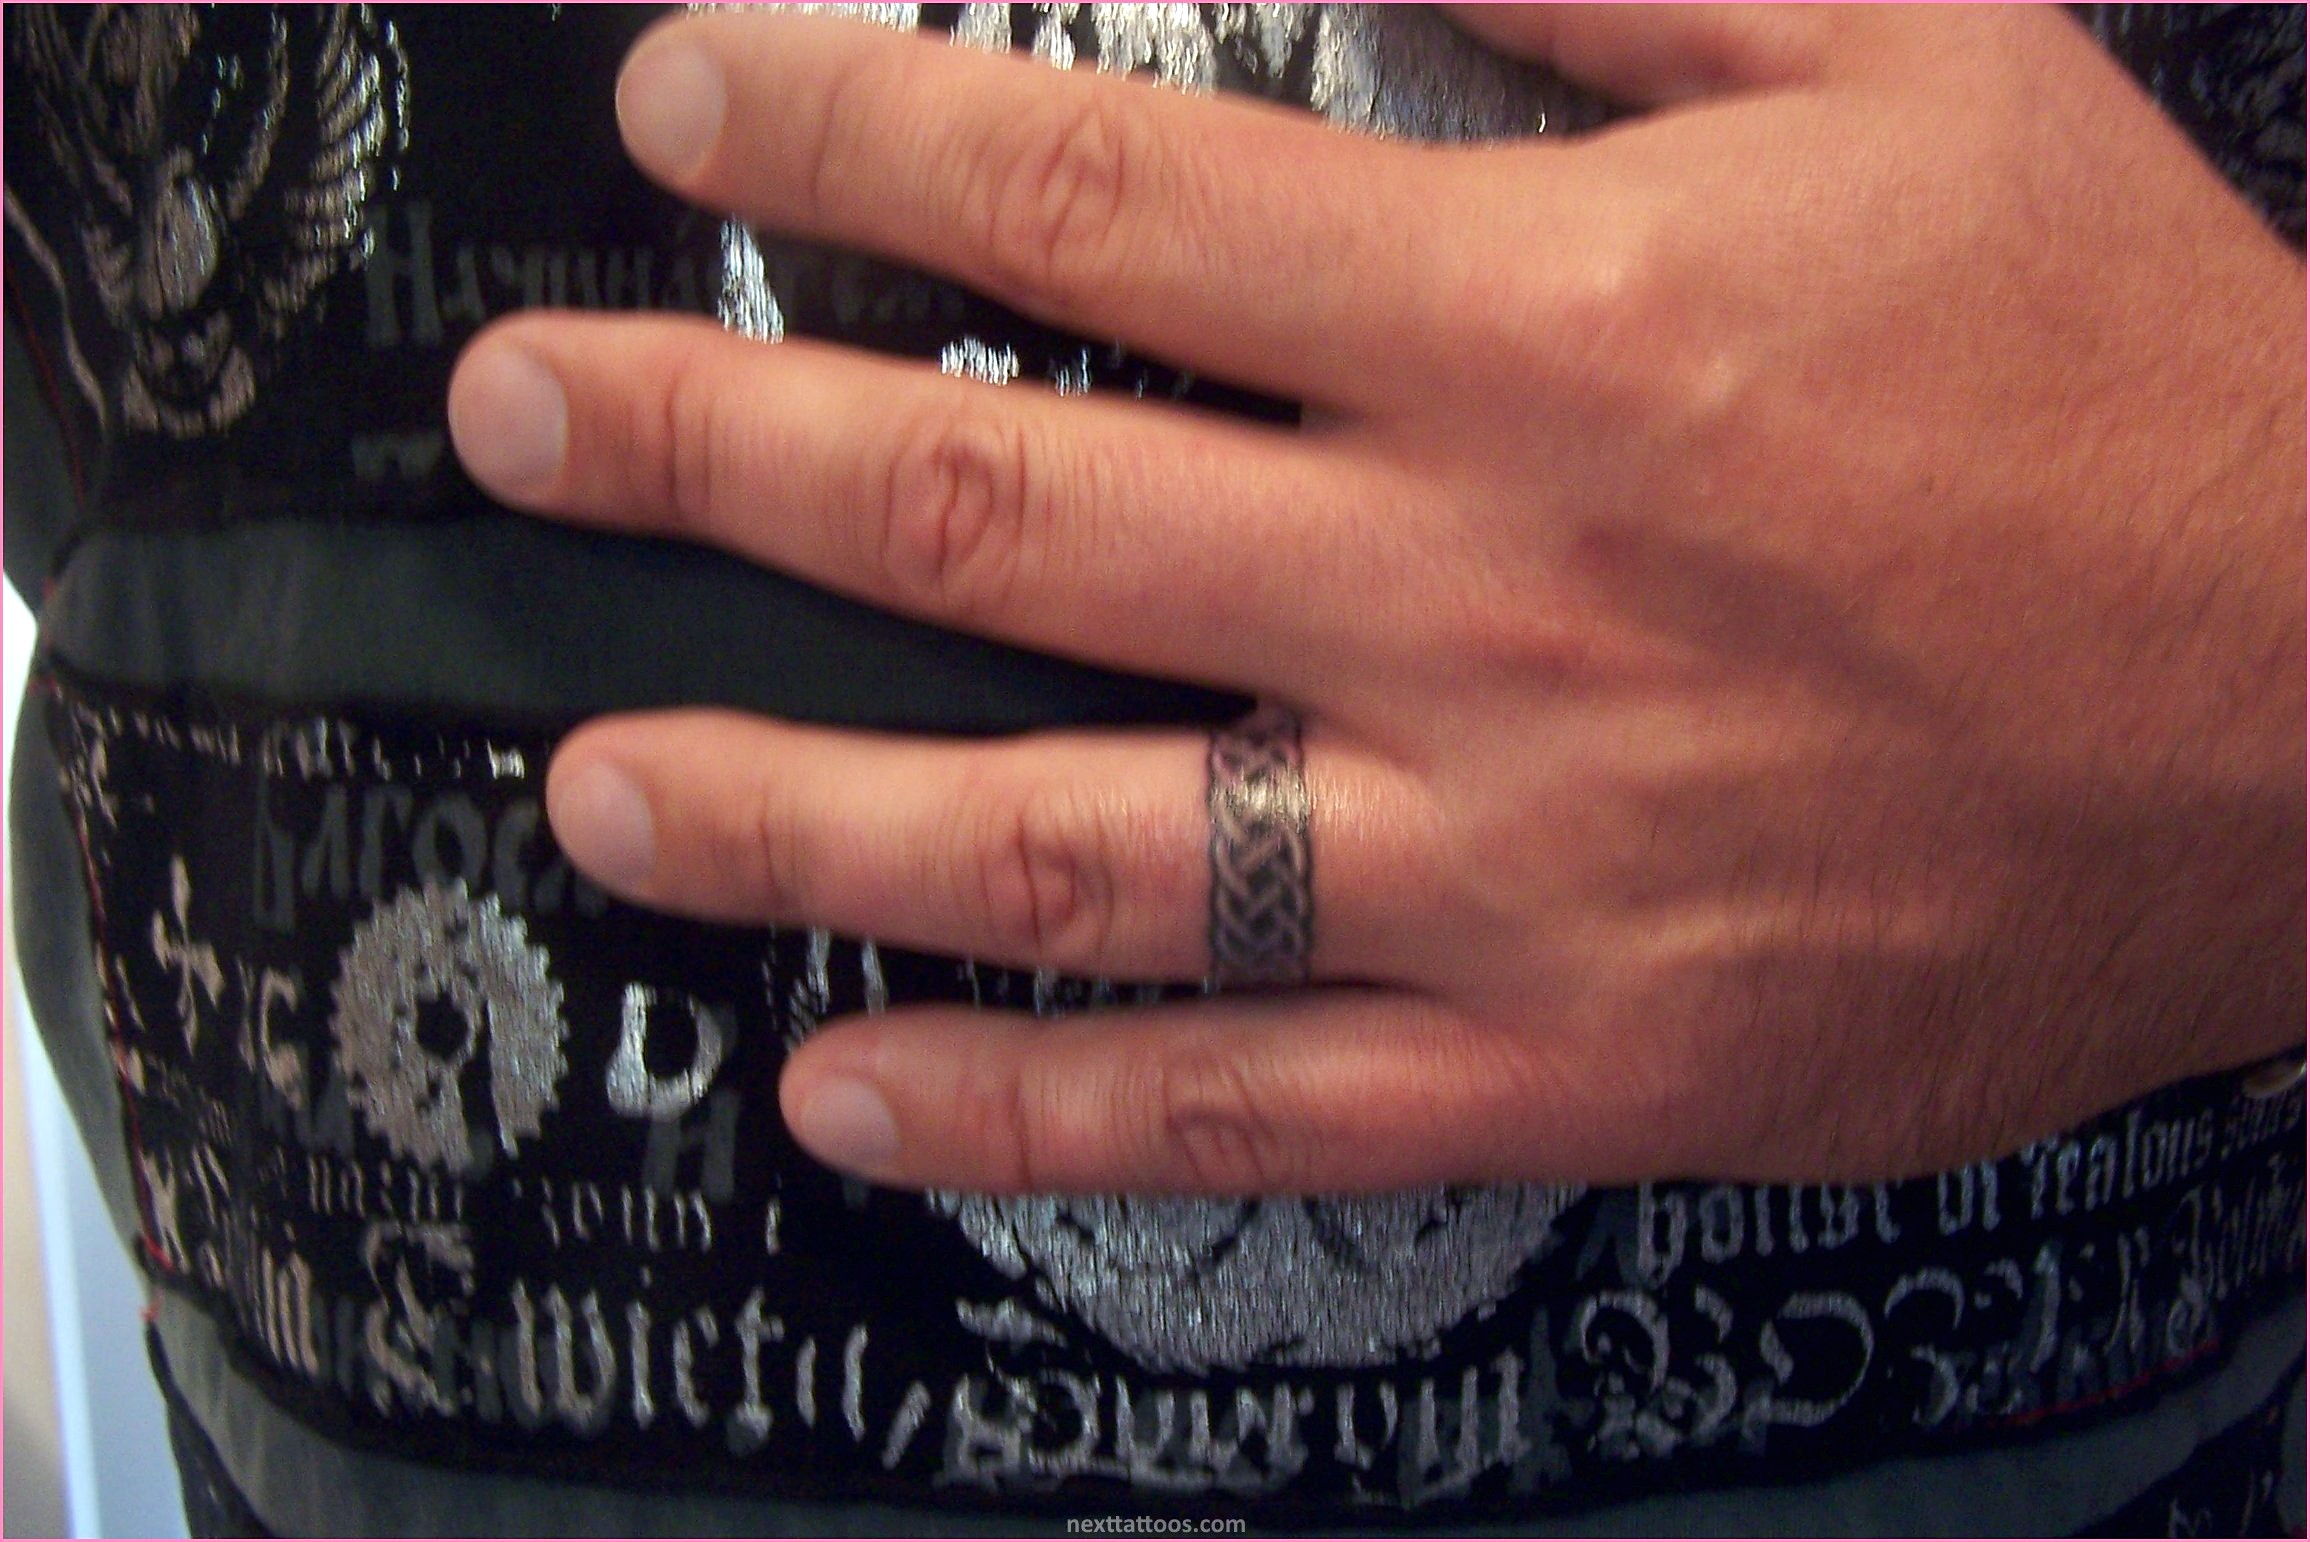 Male Ring Finger Tattoos